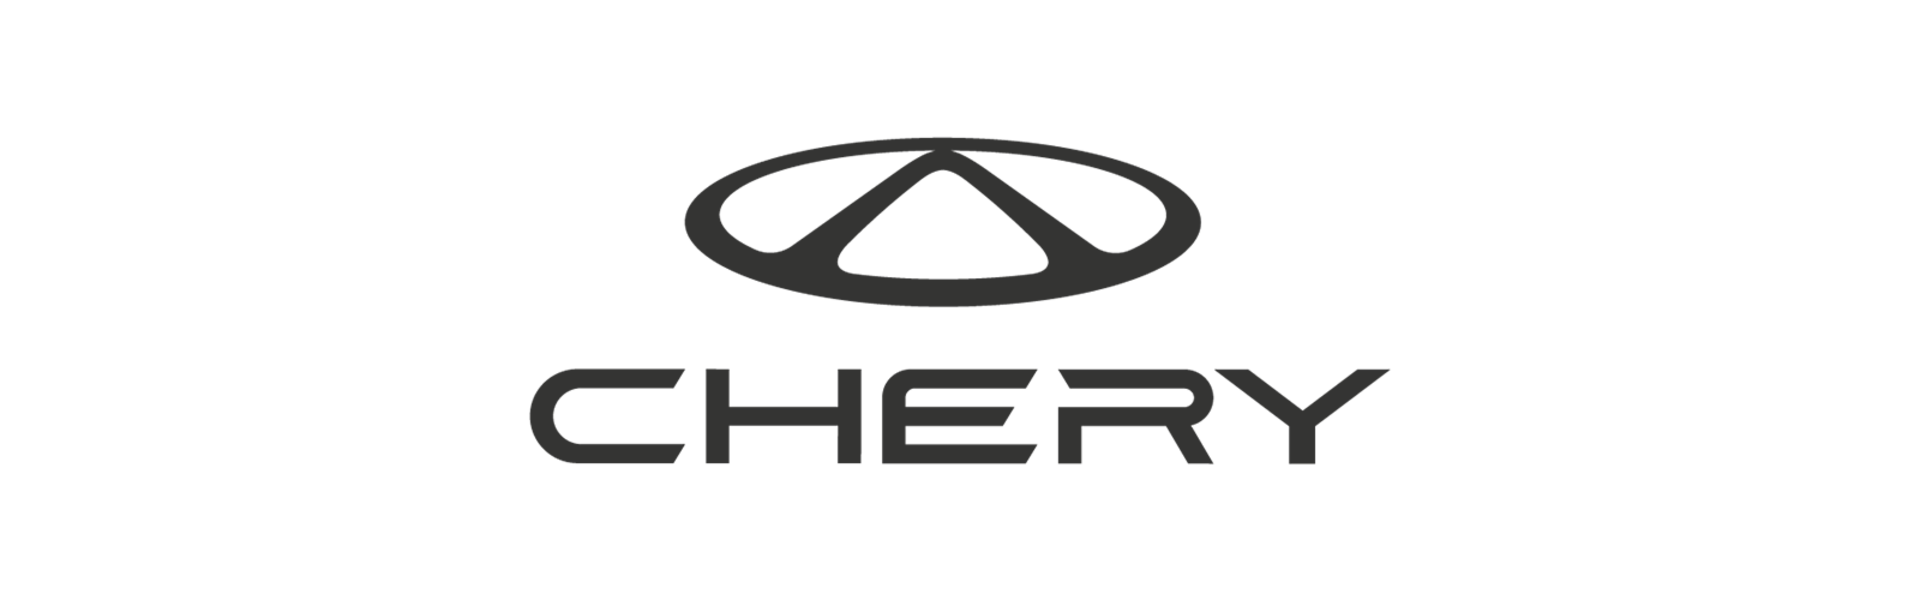 Chery логотип. Чери Тигго лого. Cherry автомобиль логотип. Китайские автомобили Chery. Чери машина логотип